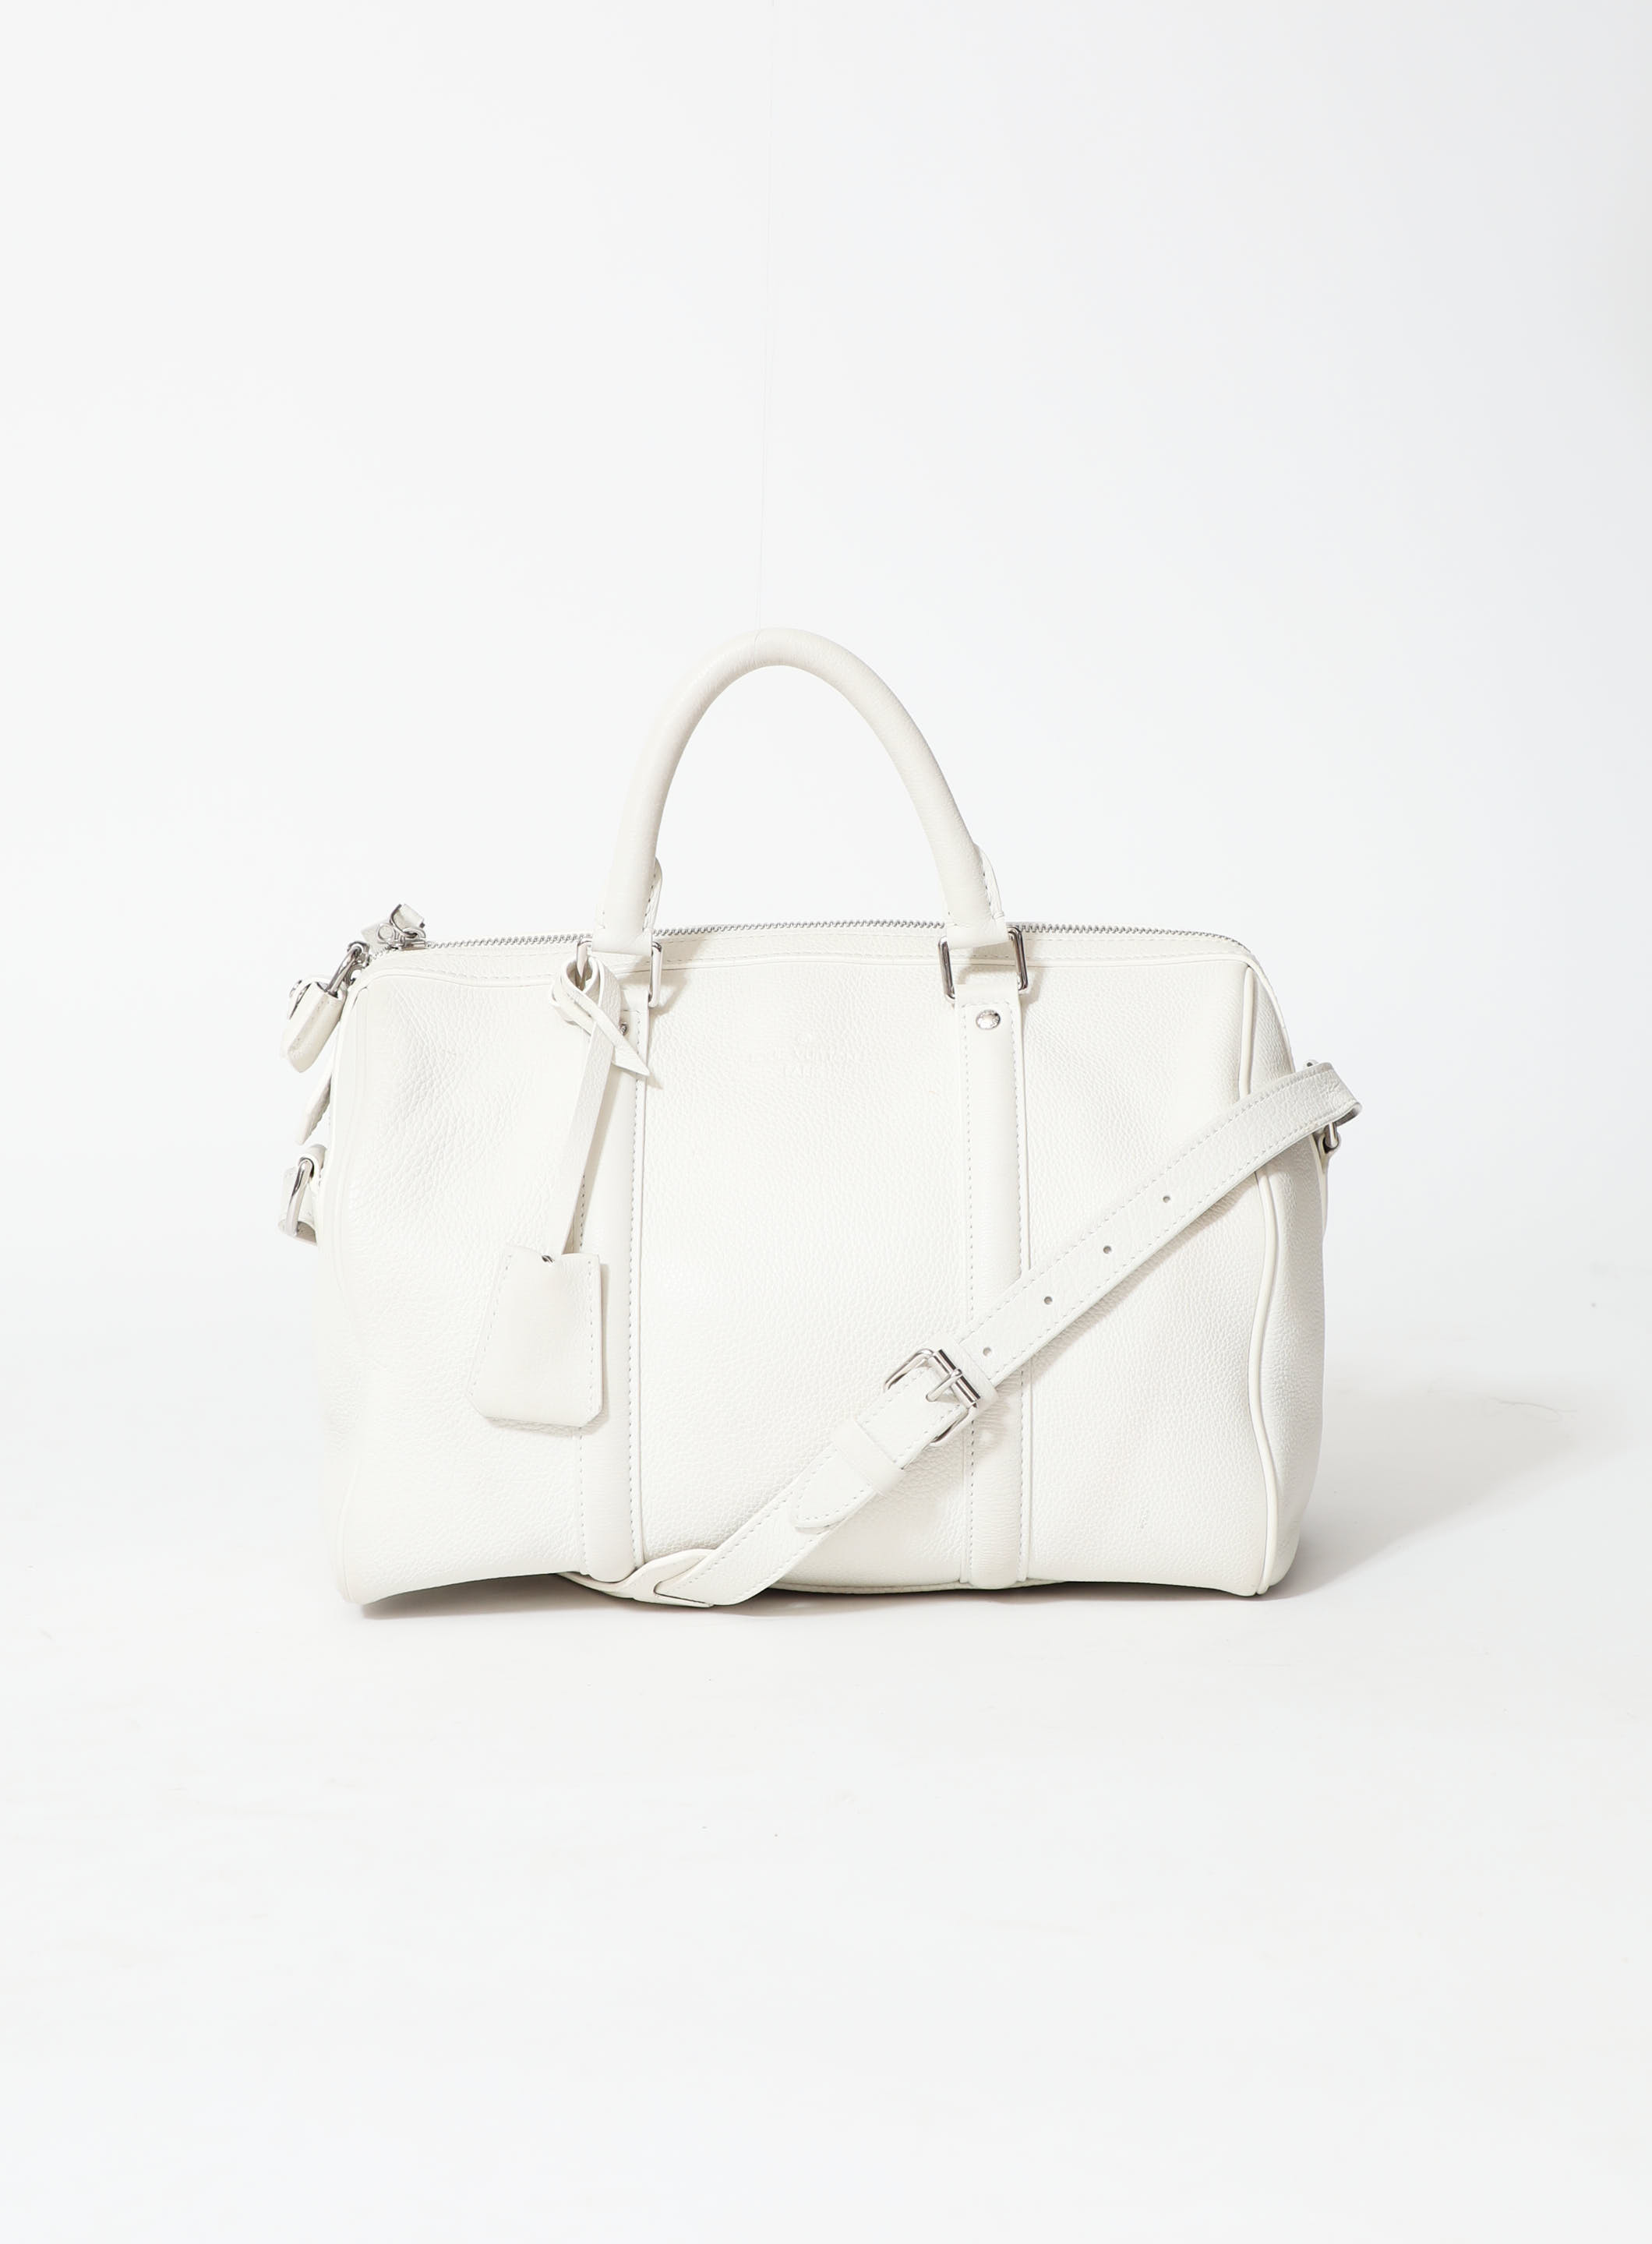 Louis Vuitton Sofia Coppola Handbag